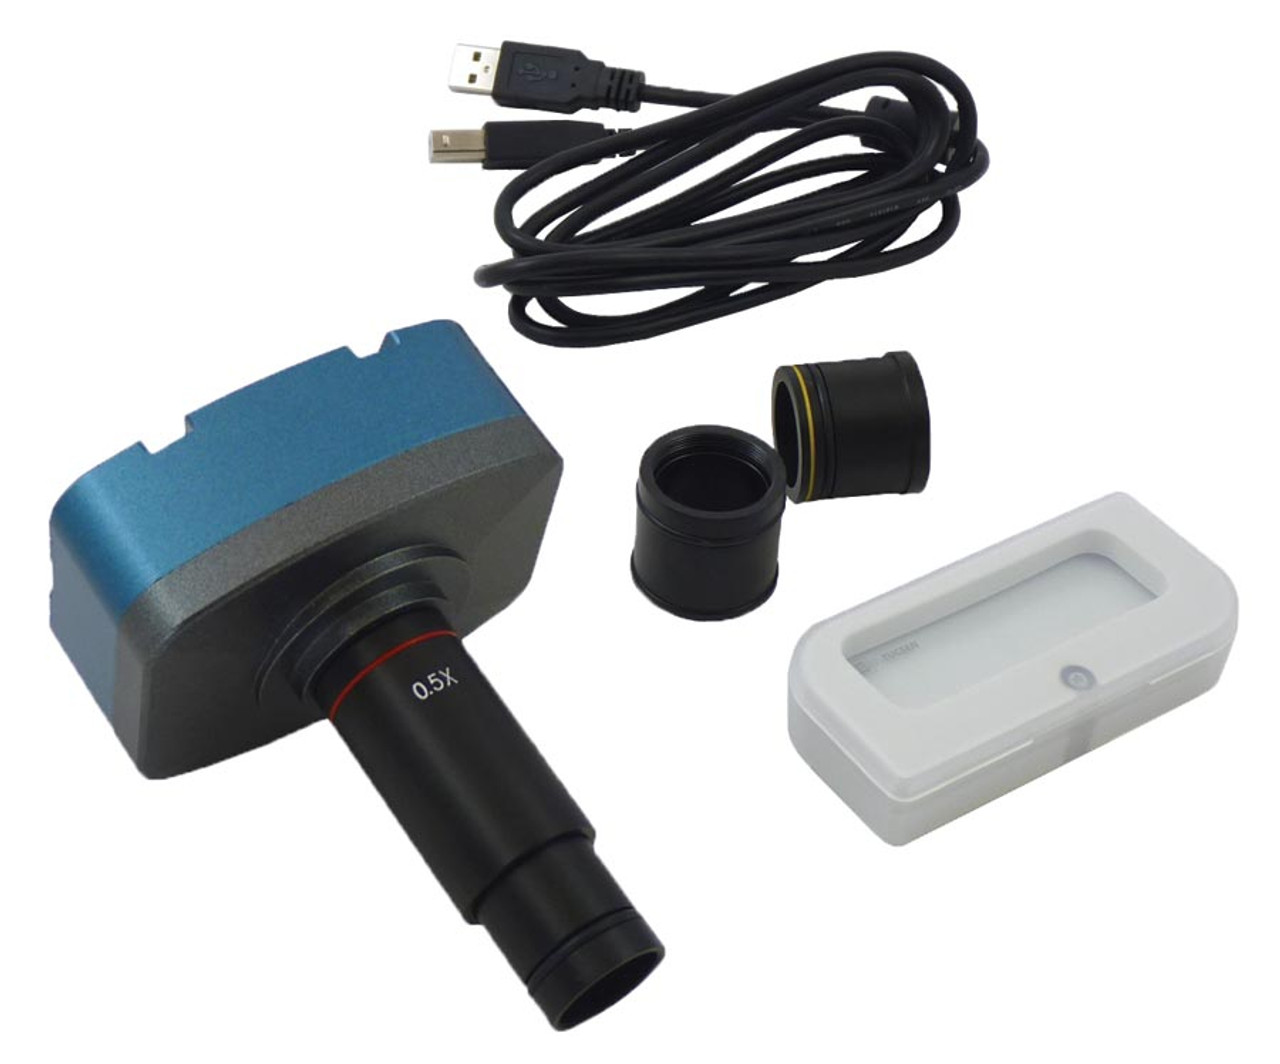 microscope gift guide - 3 MP digital camera